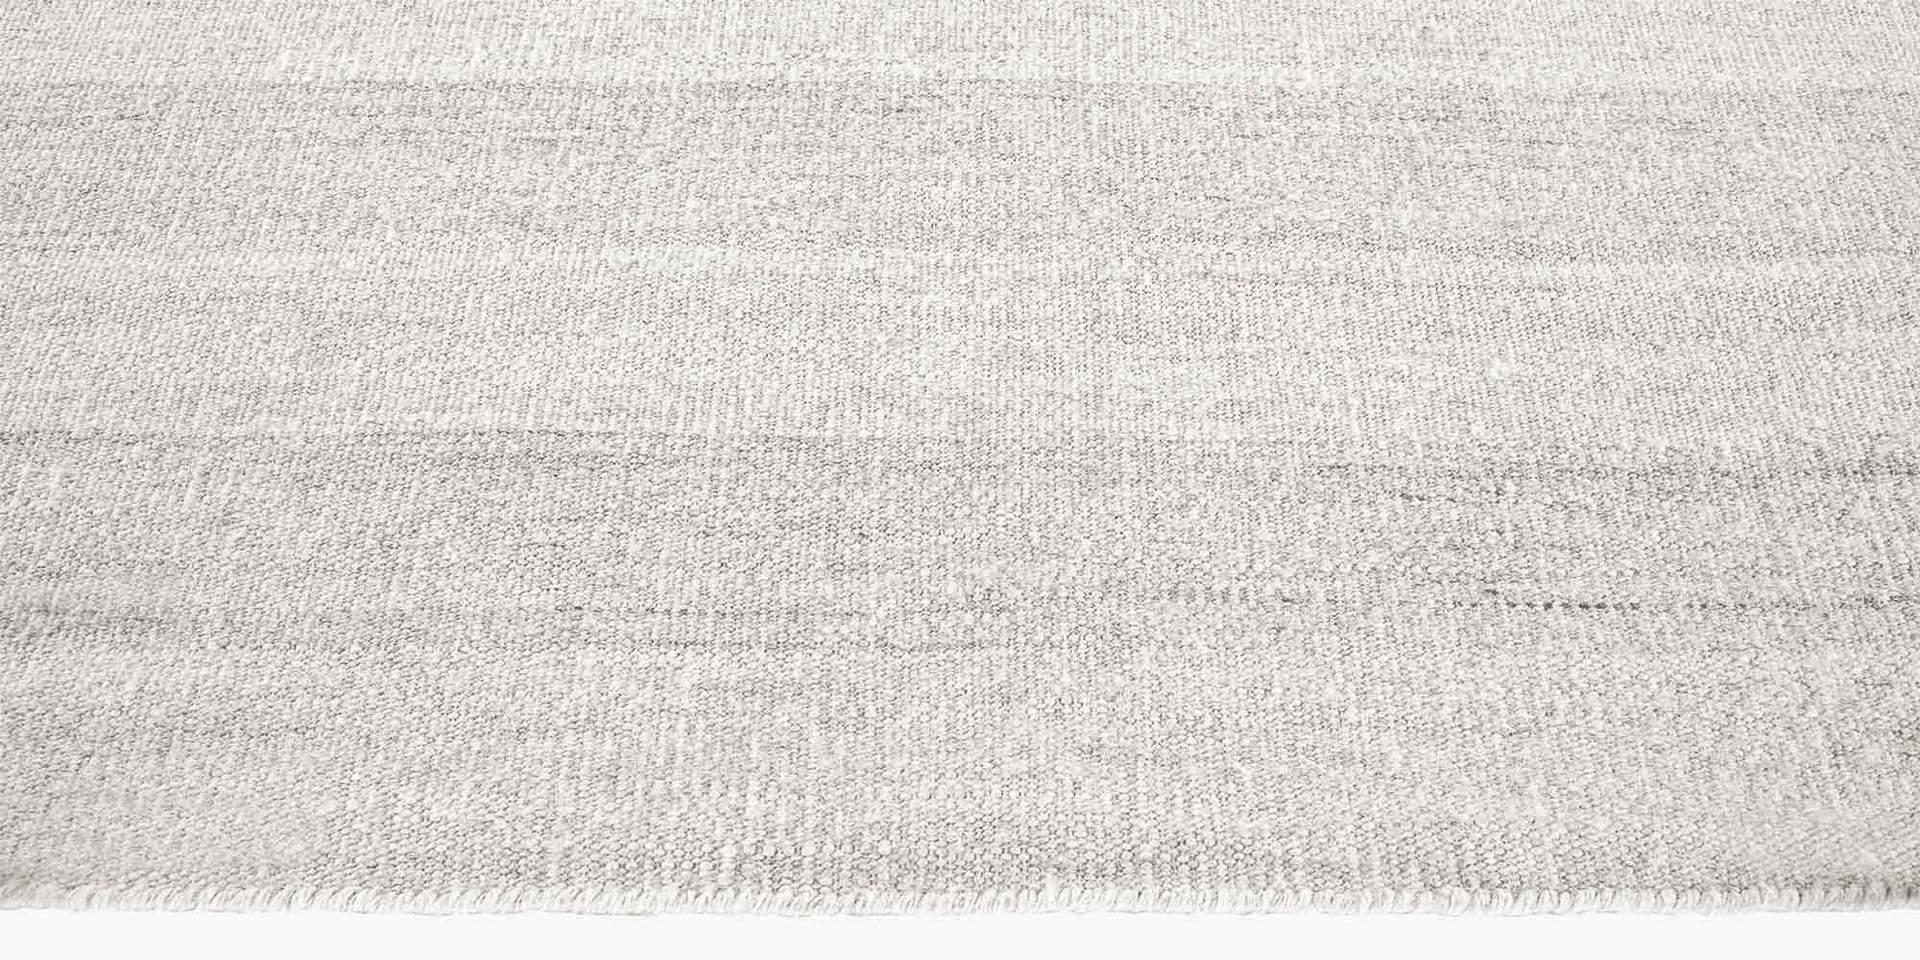 For Sale: Silver (Alterno Silver) Ben Soleimani Alterno Rug– Hand-woven Textured Soft Wool Sand 10'x14' 3